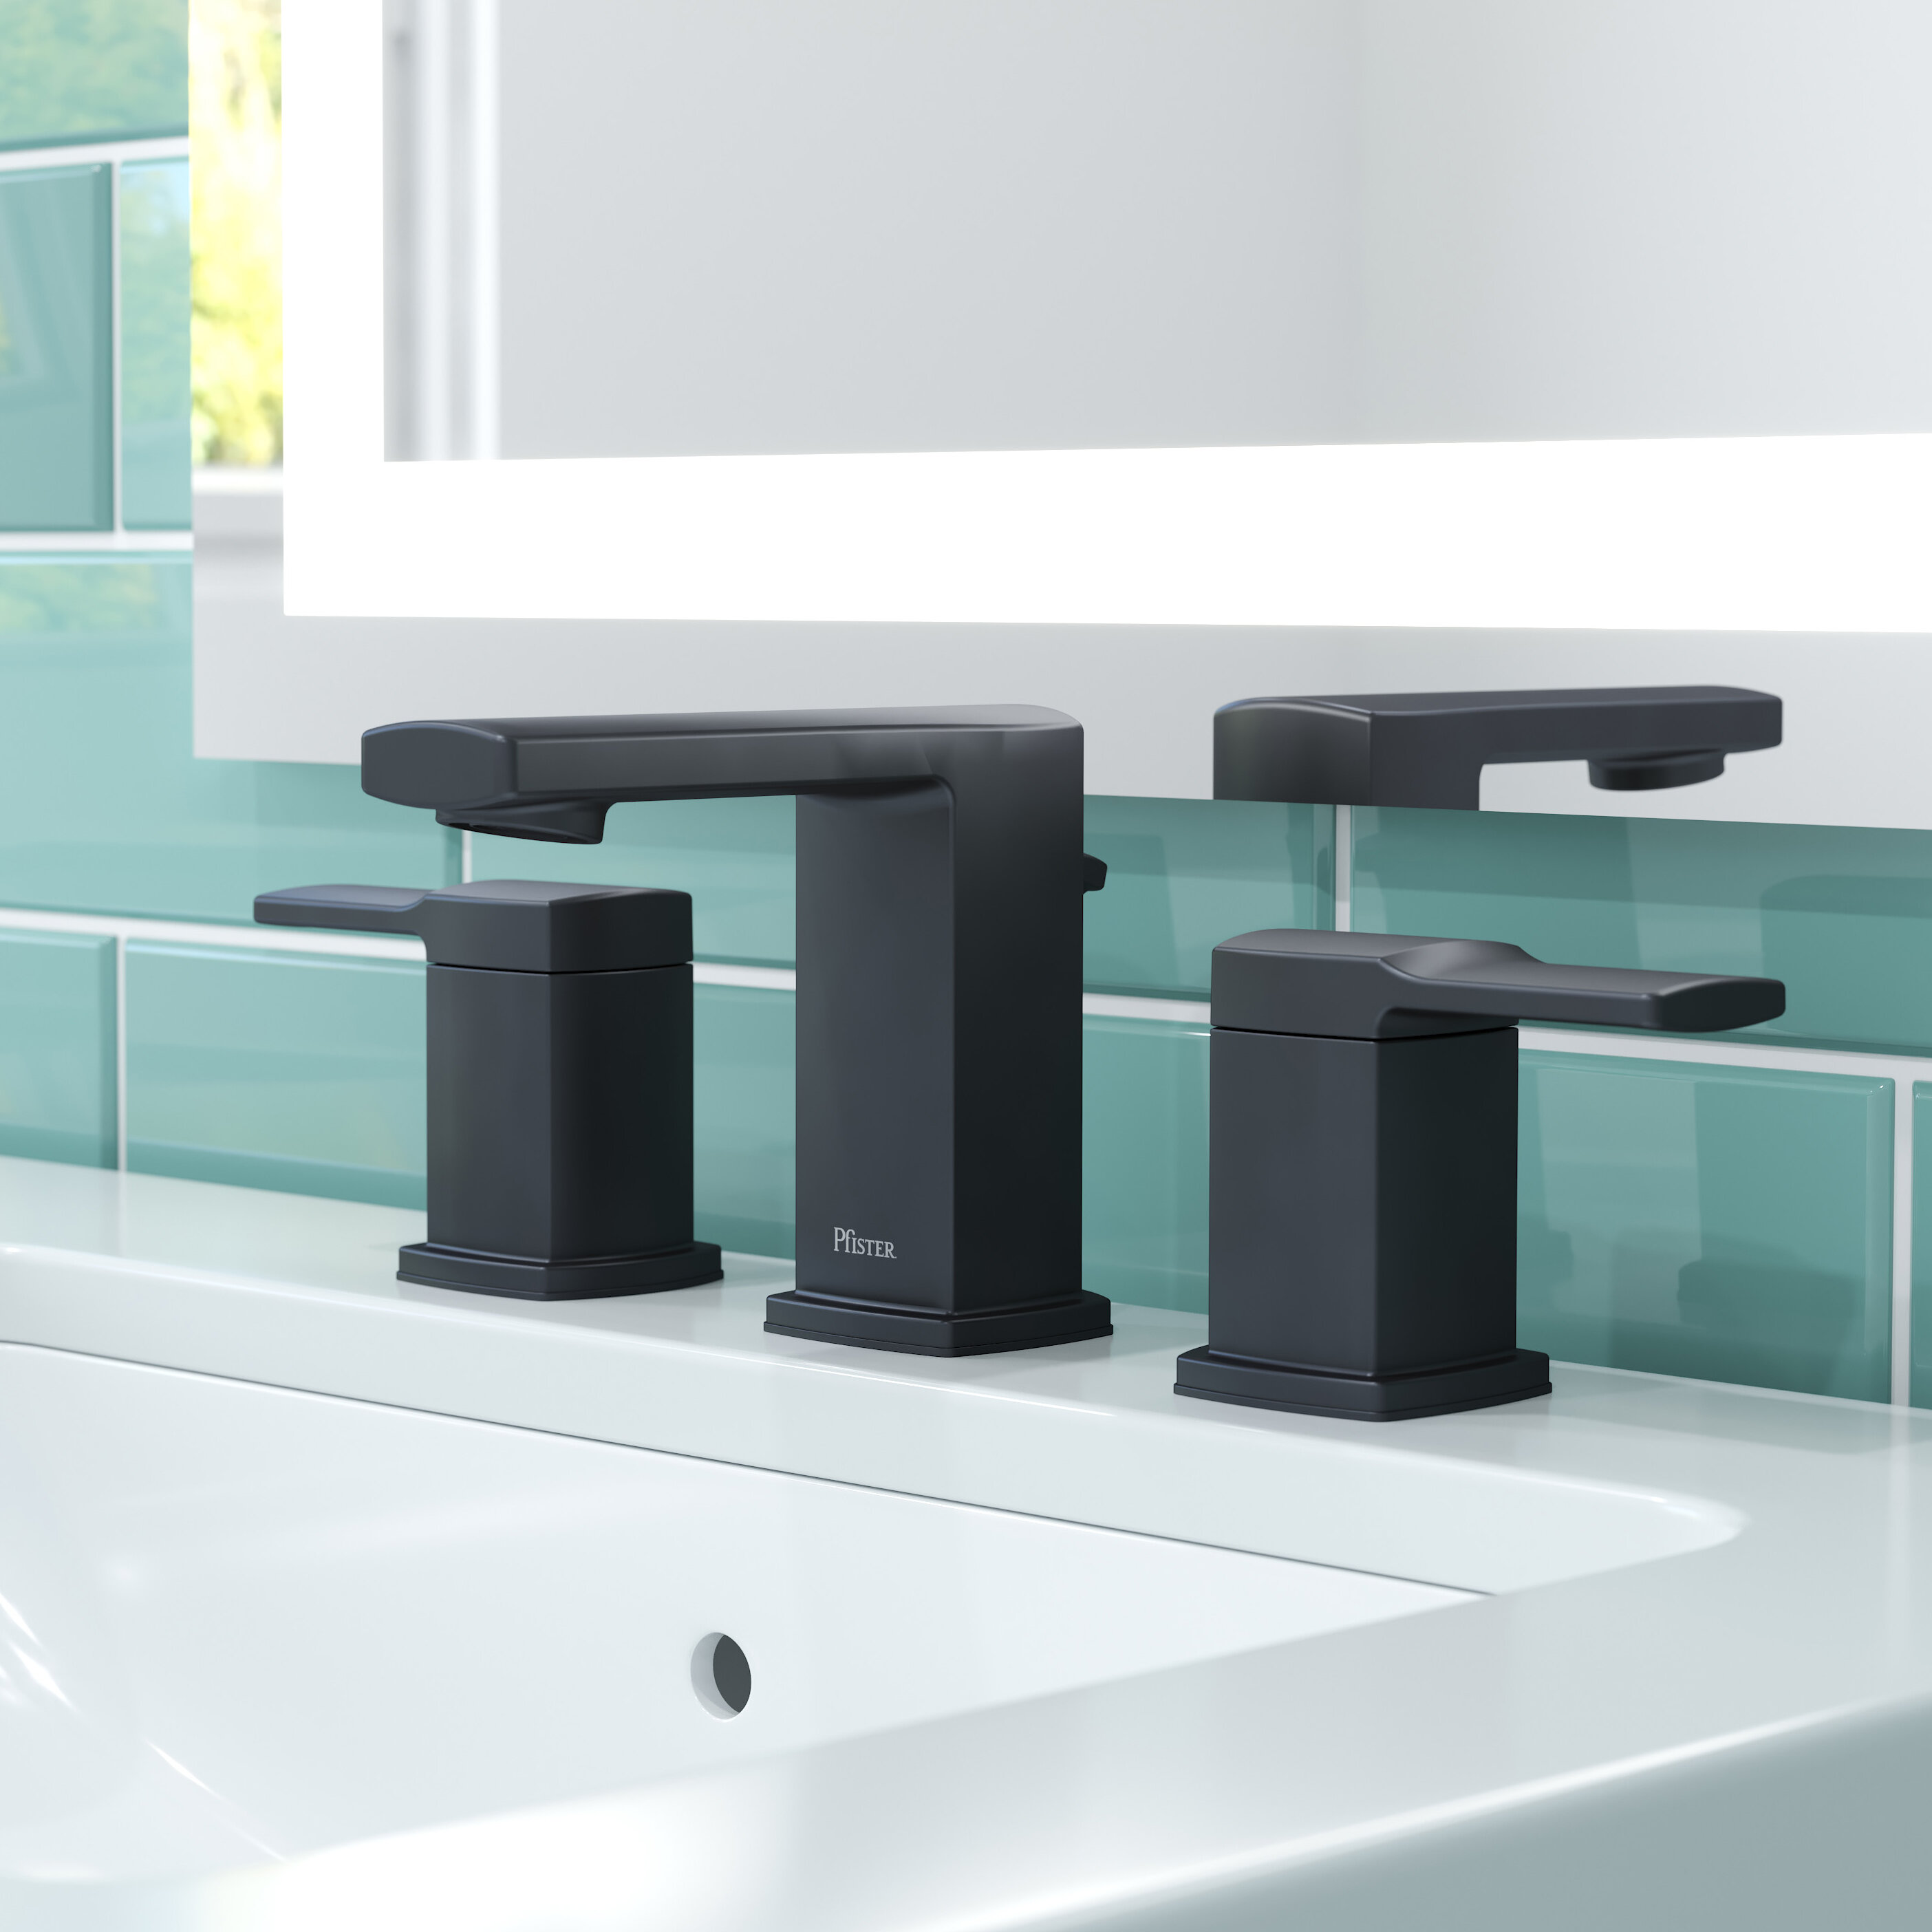 Pfister Deckard Widespread Bathroom Faucet With Drain Assembly Reviews Wayfair Ca